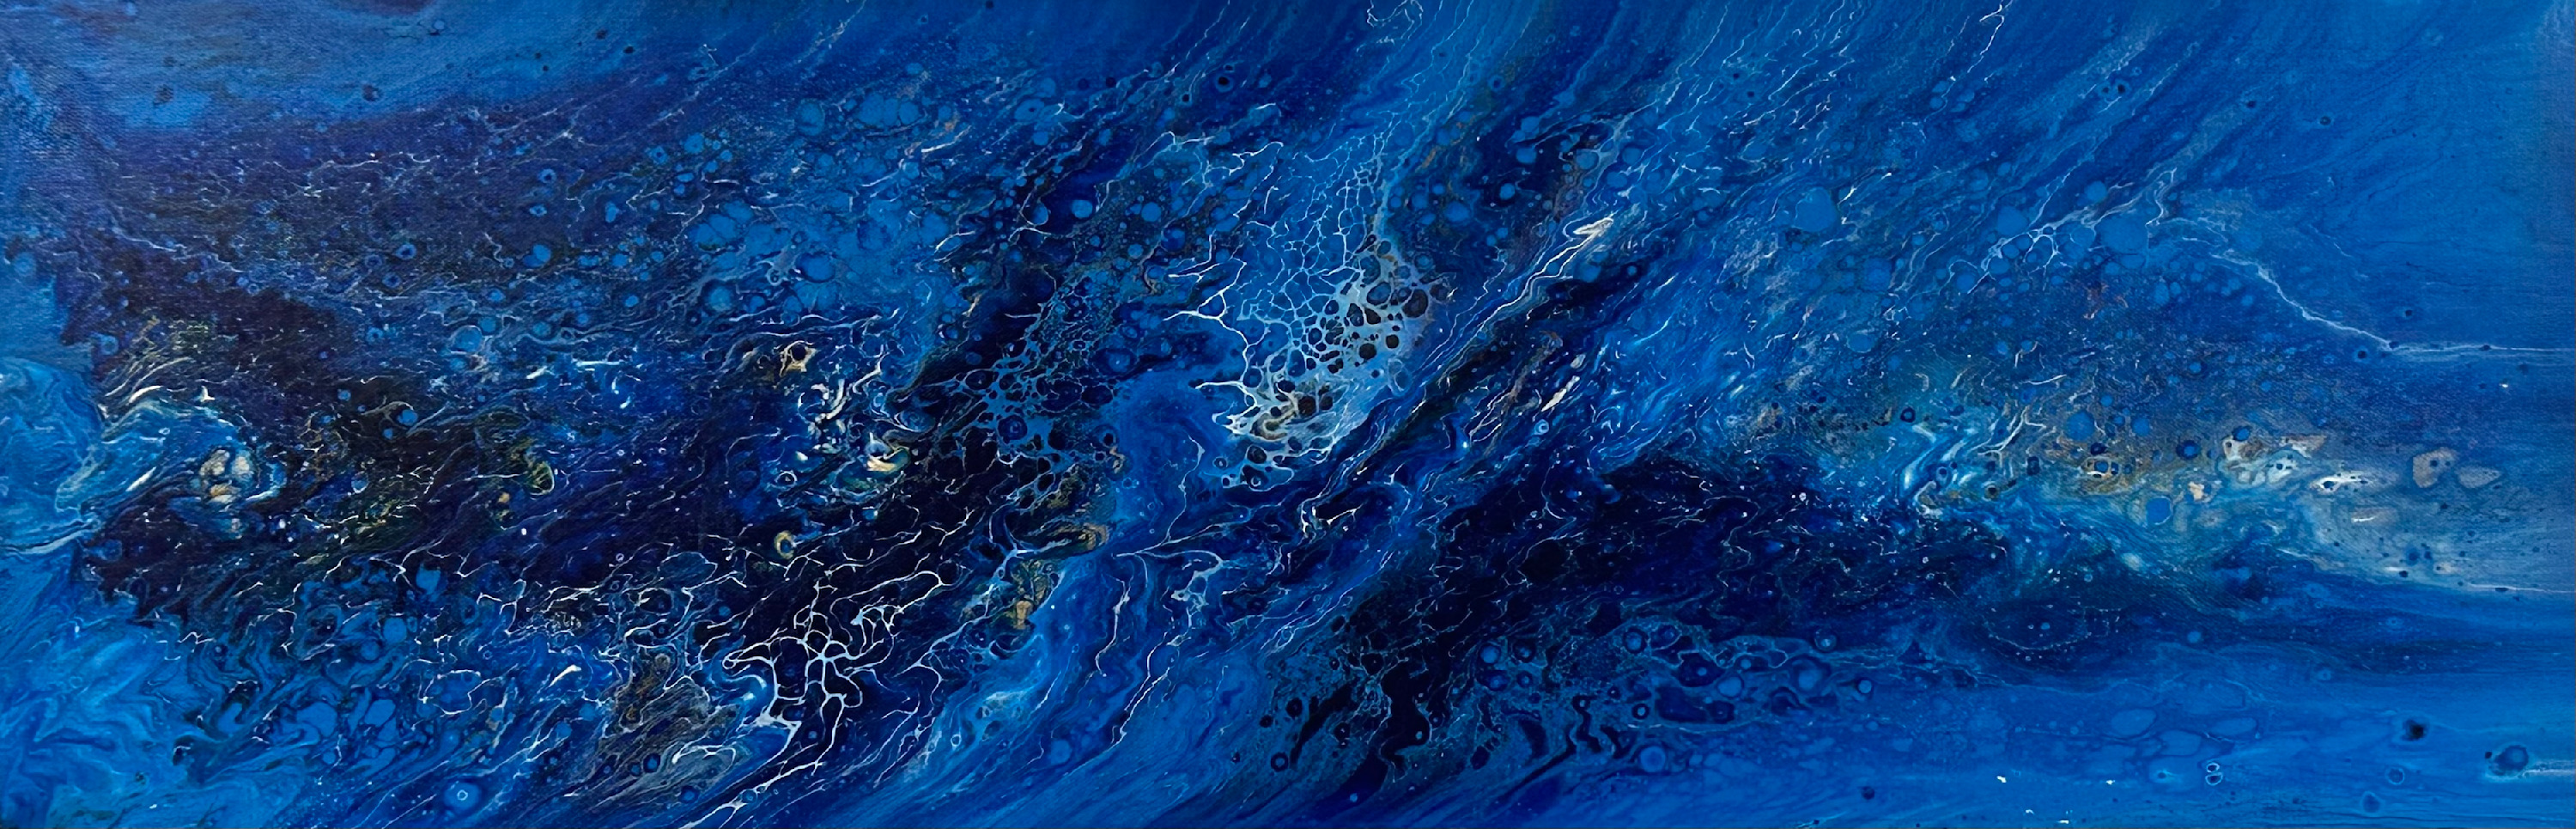 Deep blue 12x36 on gallery canvas 250 prints wxrdyl